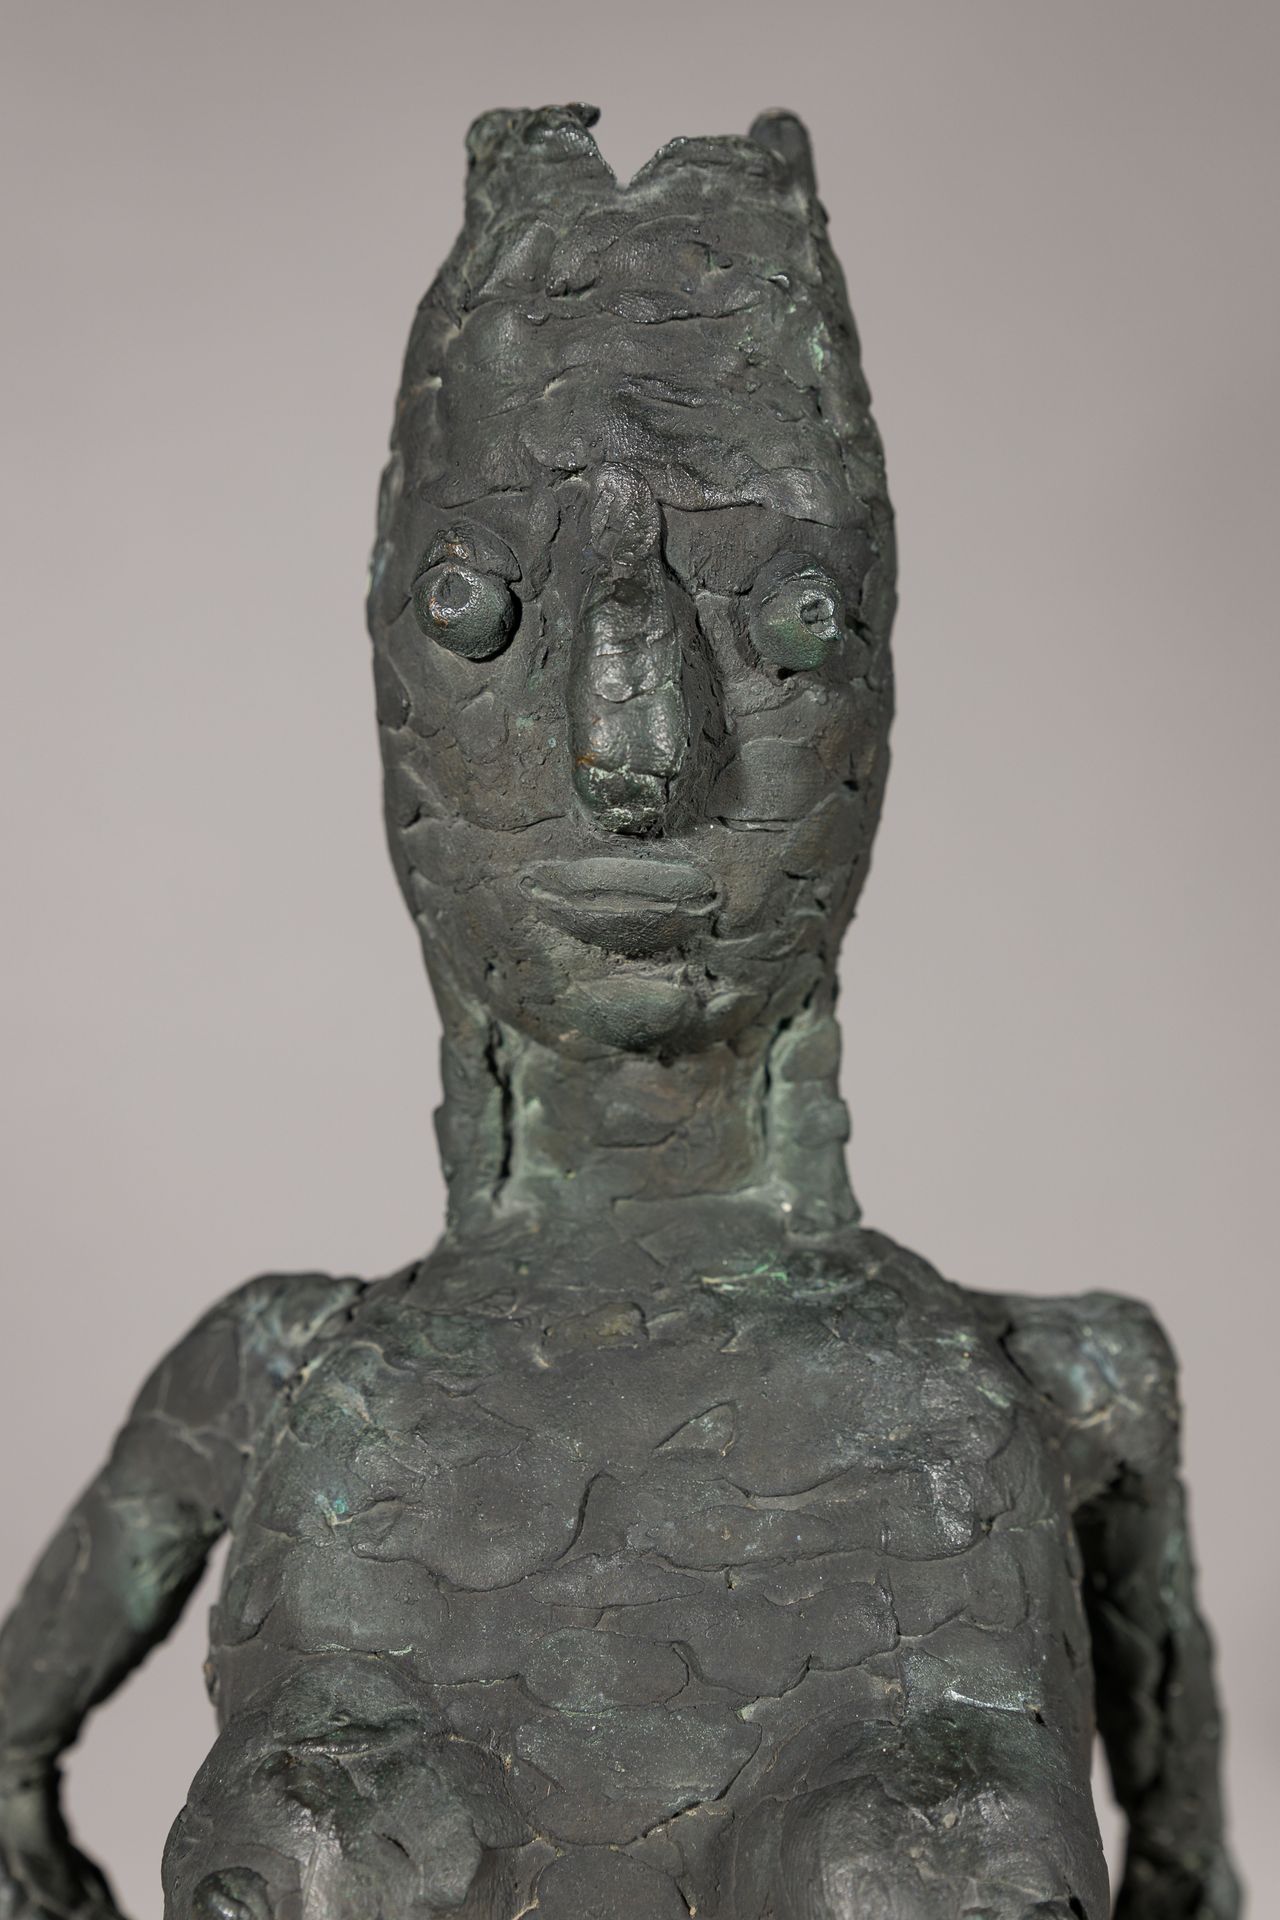 Bottoli, Oskar Nu féminin debout, 1971
Bronze construit en creux
Monogrammé et d&hellip;